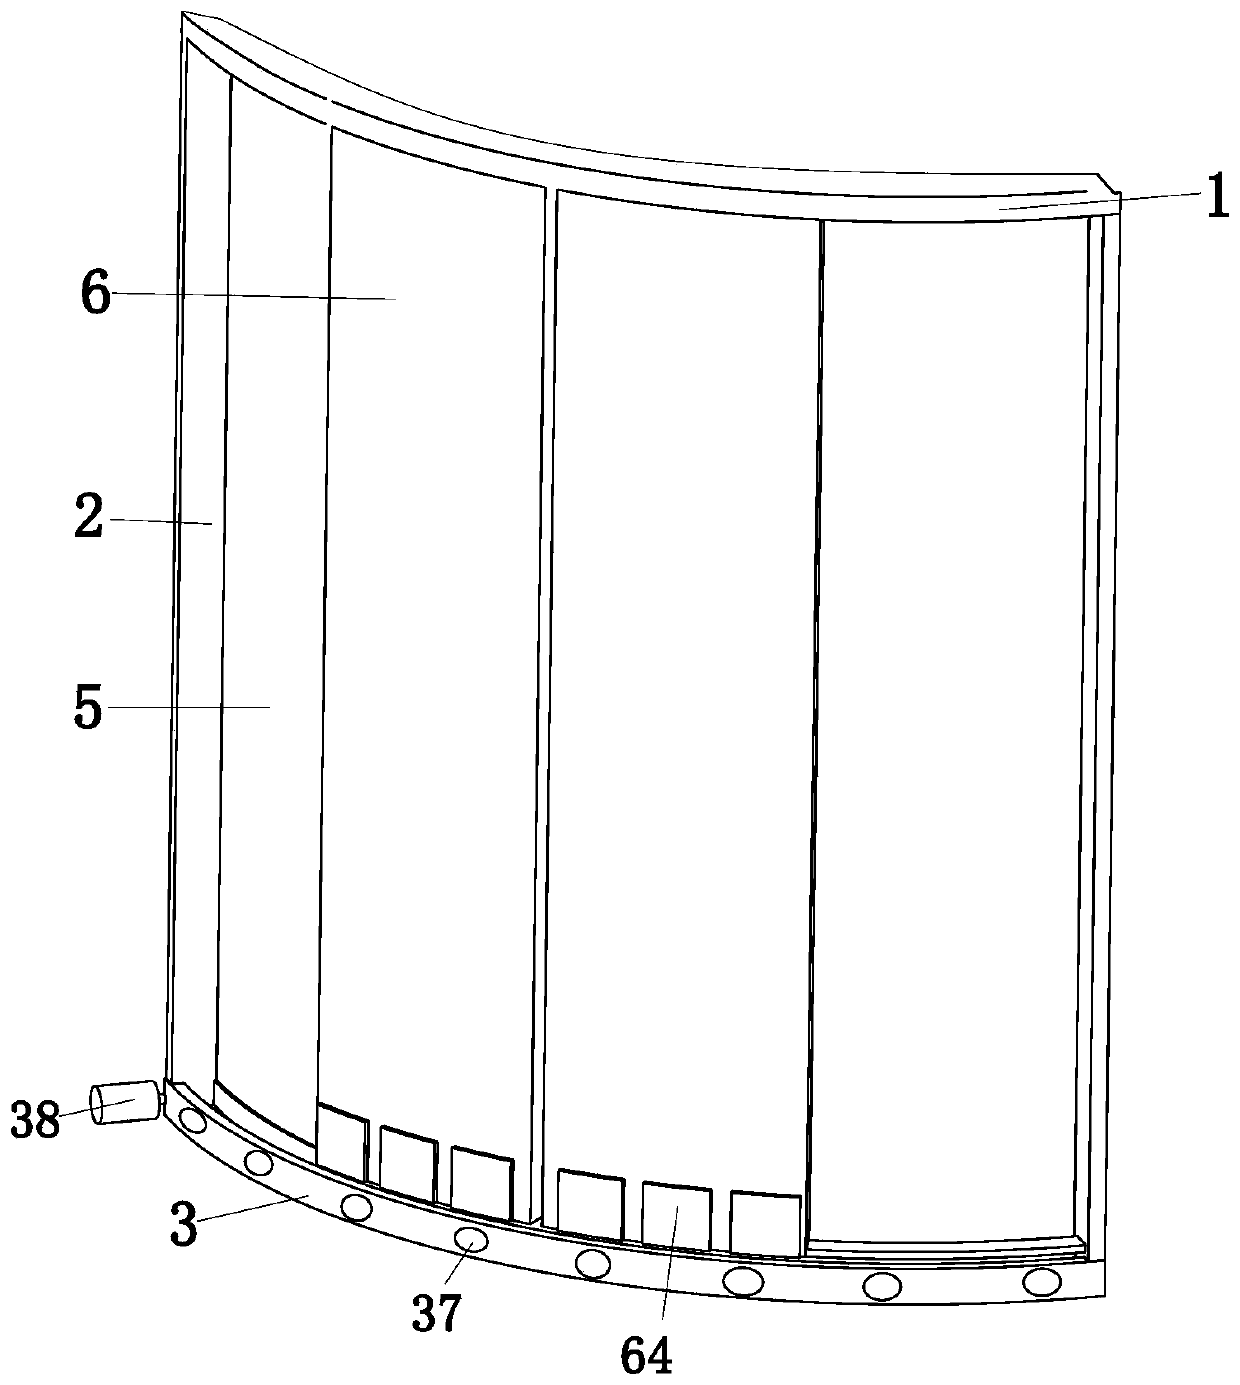 A shower room glass sliding door structure